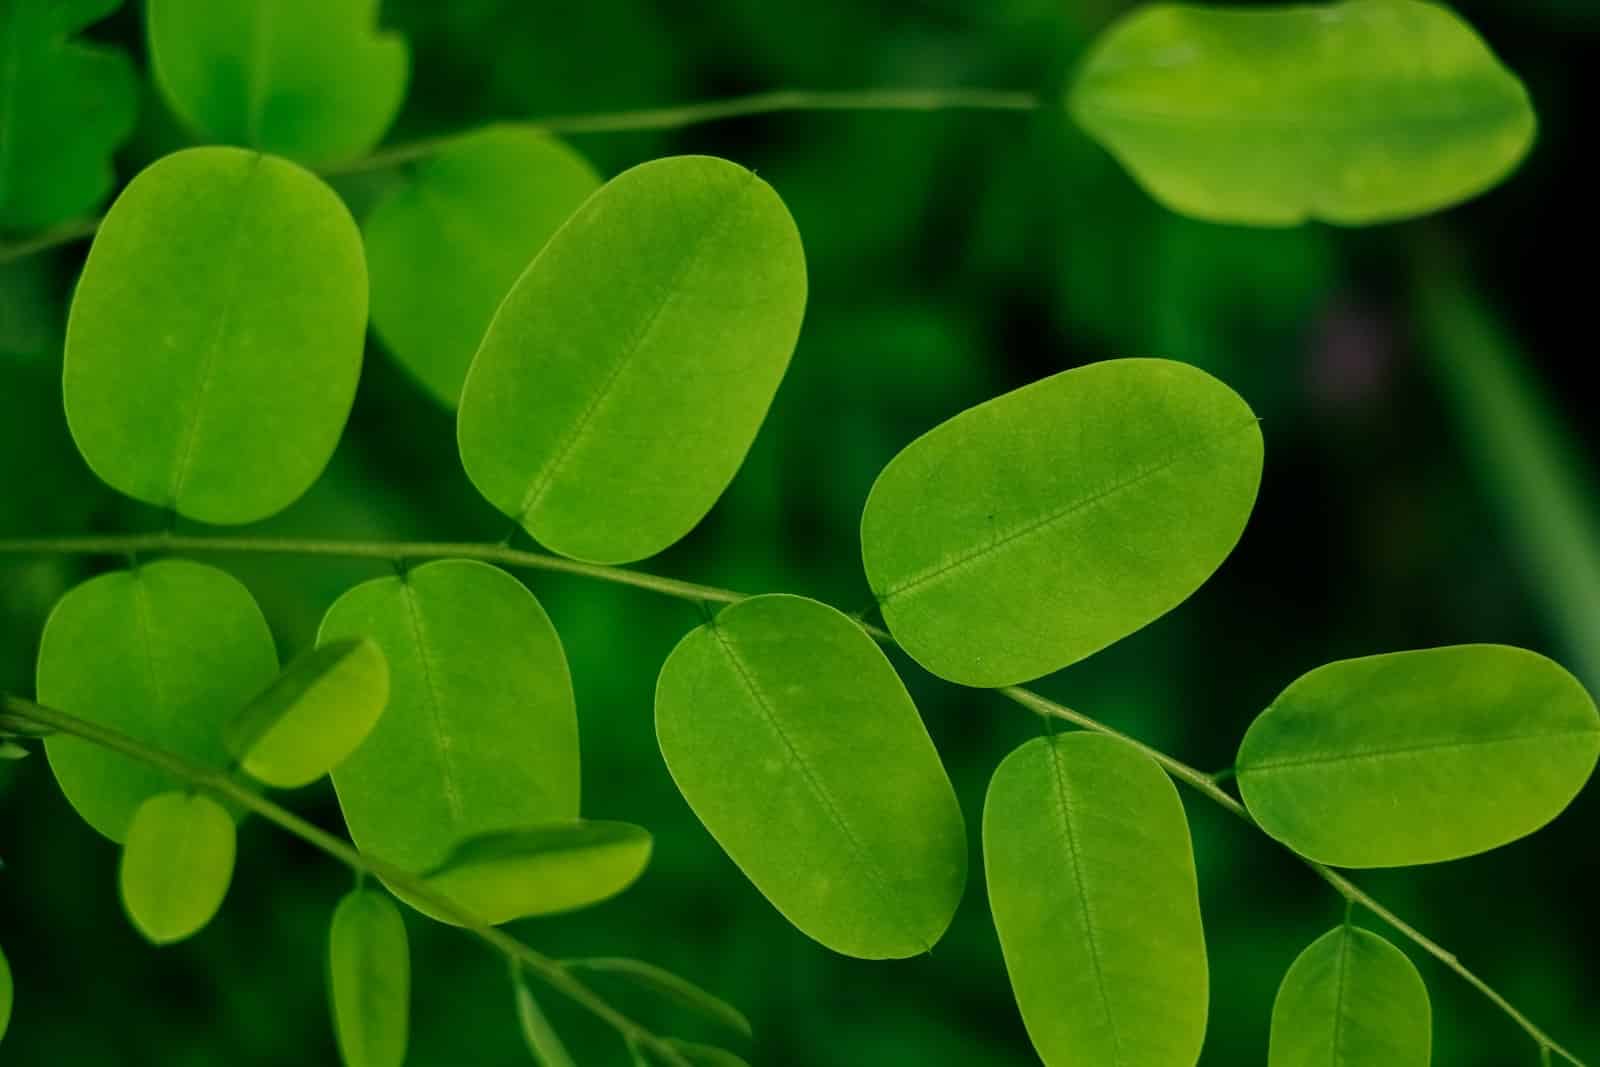 wovjoipwgy4 How to Grow and Care for Moringa Plants: Tips, Benefits, and Uses 1